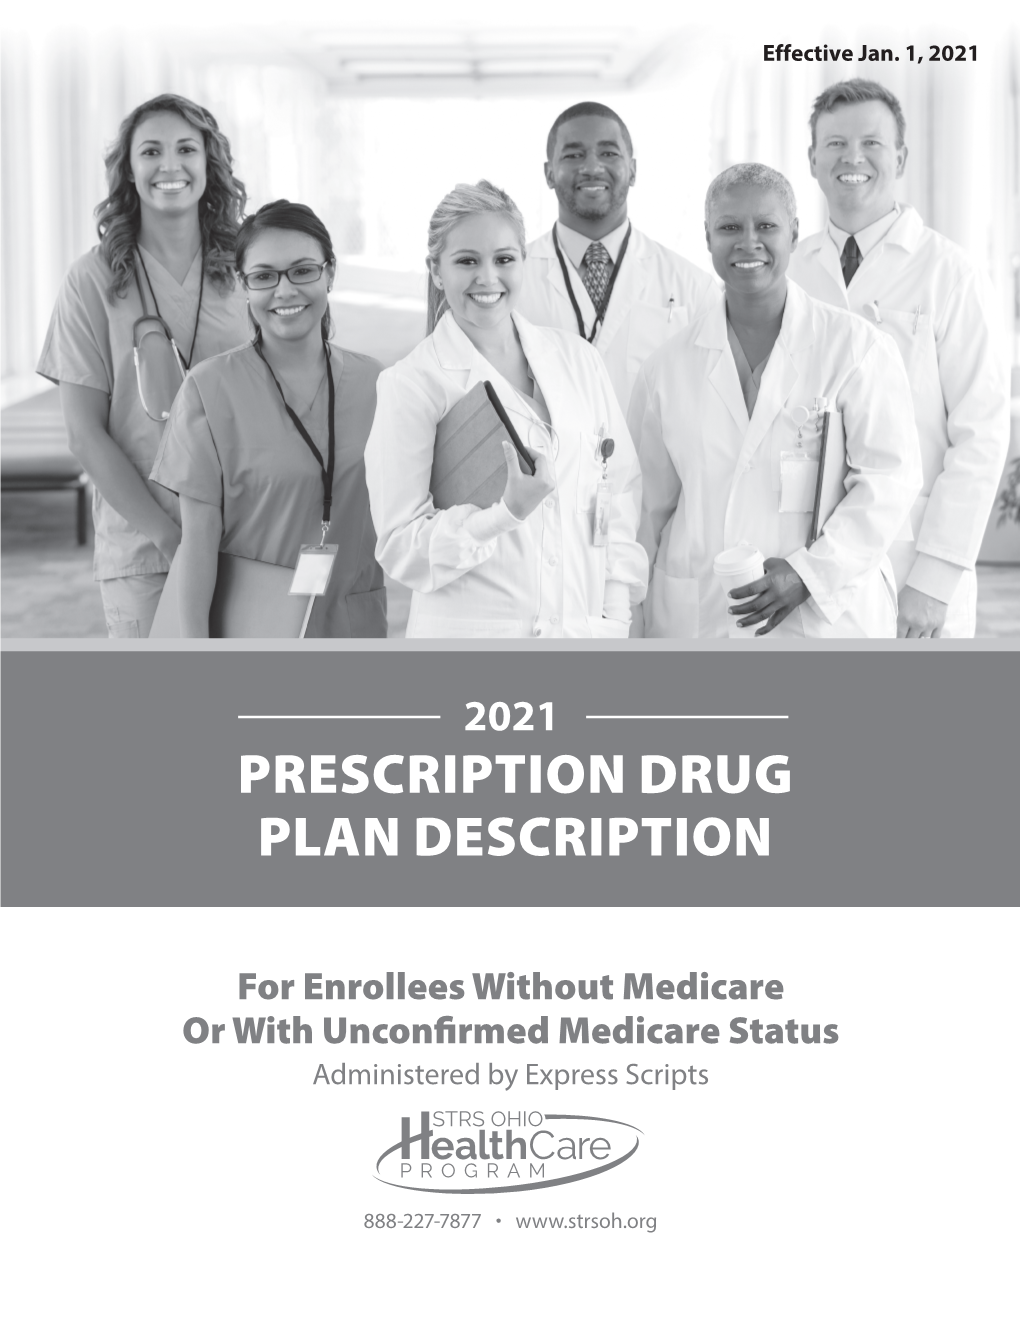 Express Scripts Prescription Drug Plan Description